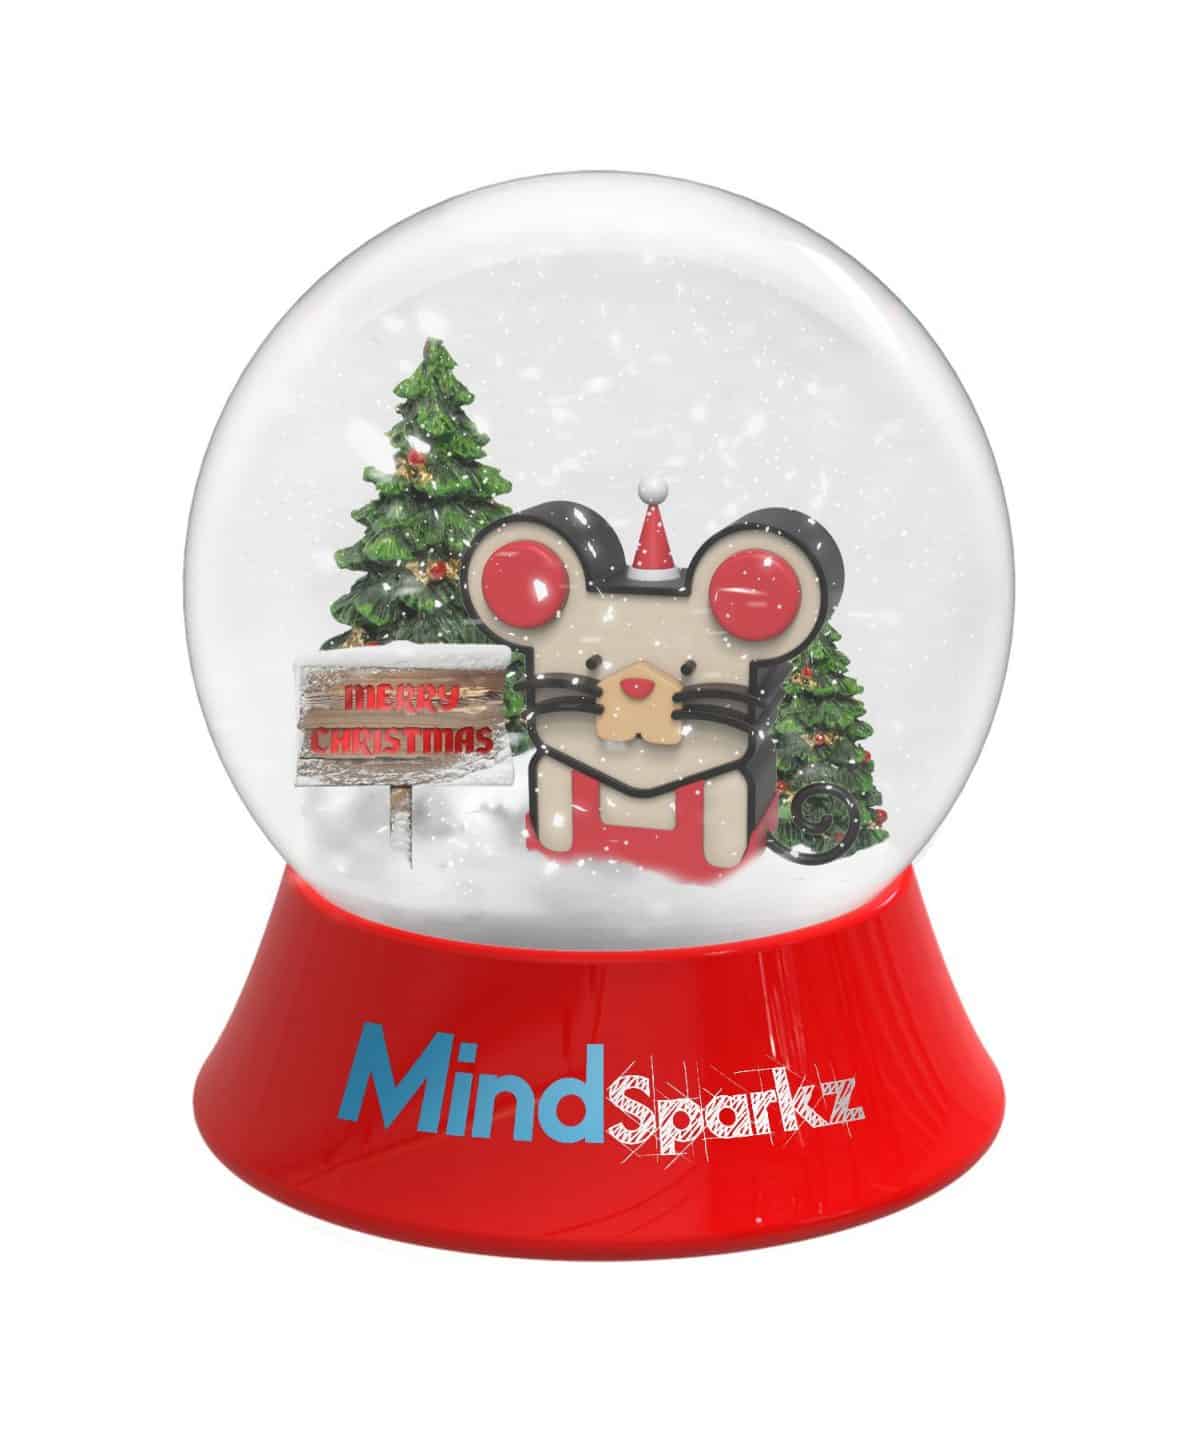 Christmas-themed snow globe with festive design.